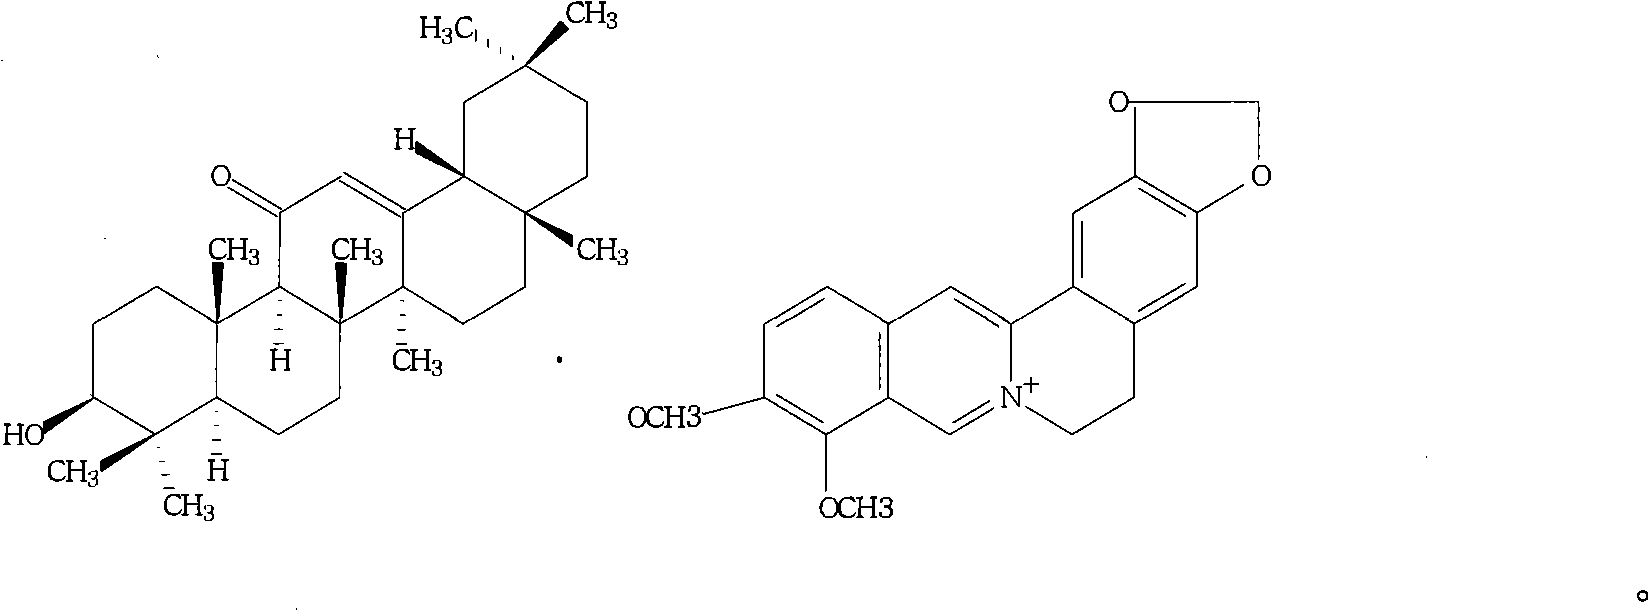 Berberine glycyrrhetinic acid enantiomeric salts and preparation method and application thereof